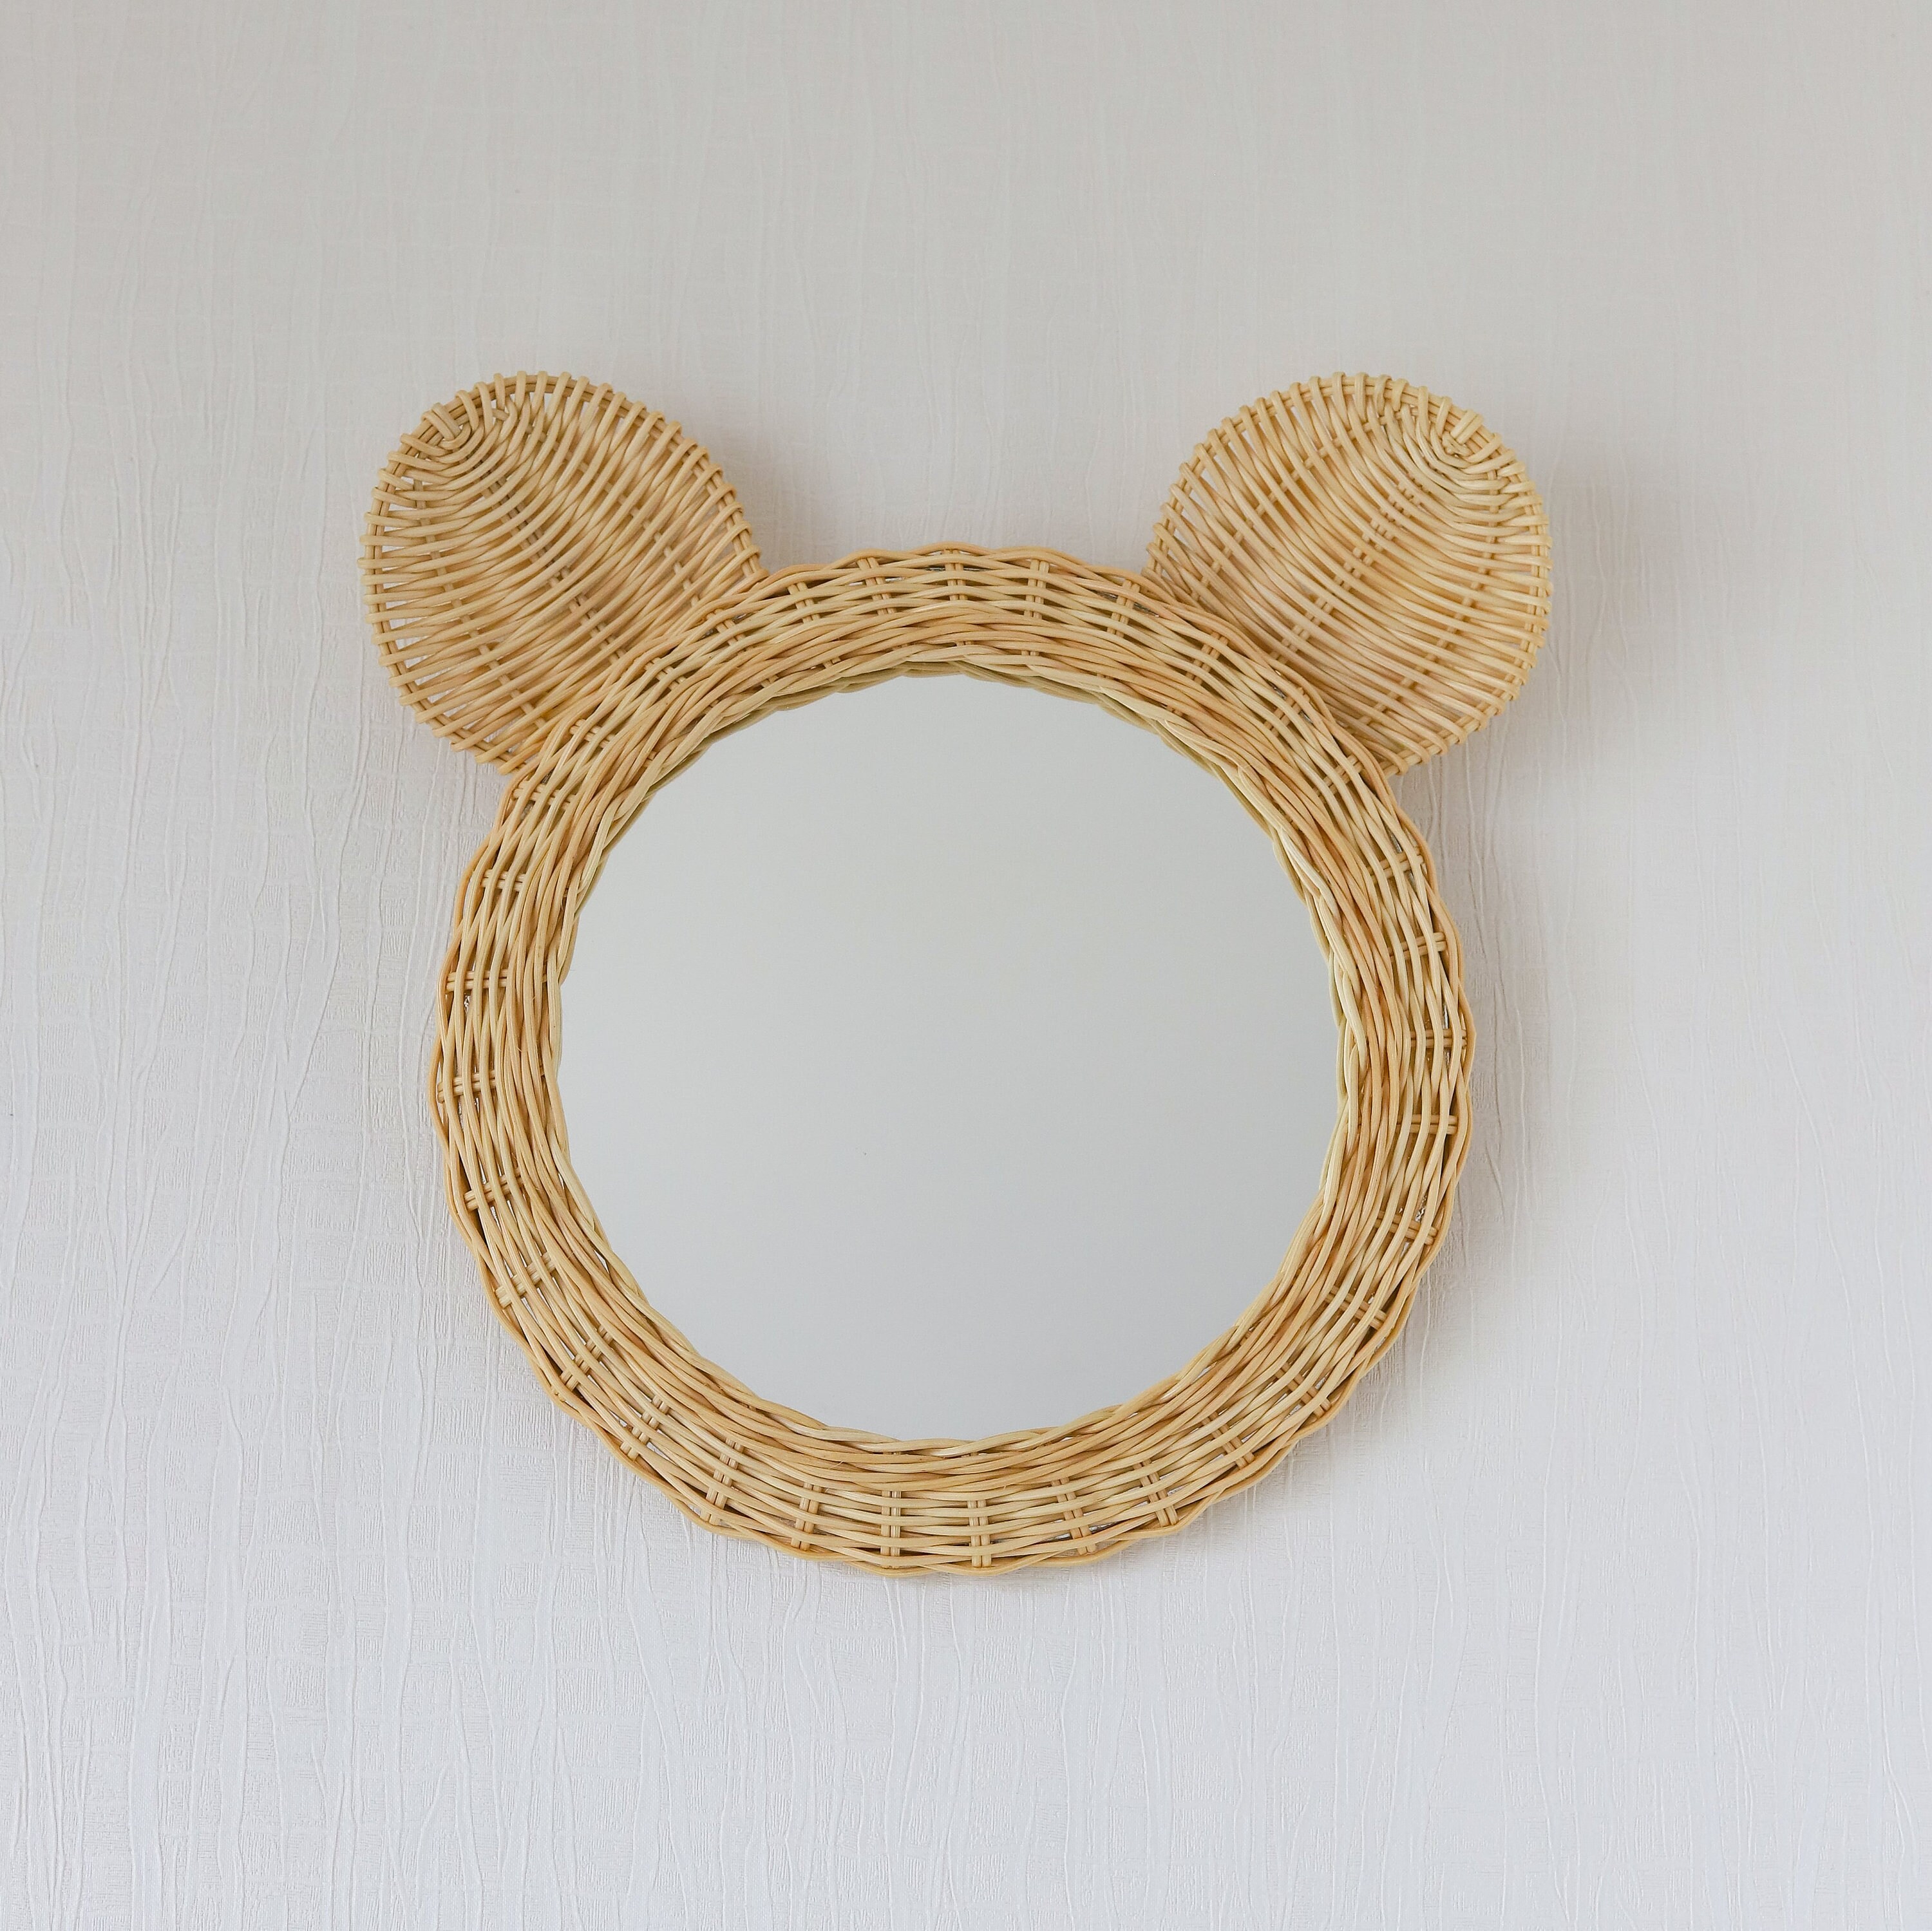 Unbreakable Mirror Handmade Wall Mirror Little Bear for Children's Bedroom  Kidsroom Babyroom Cozy Cute Decor 